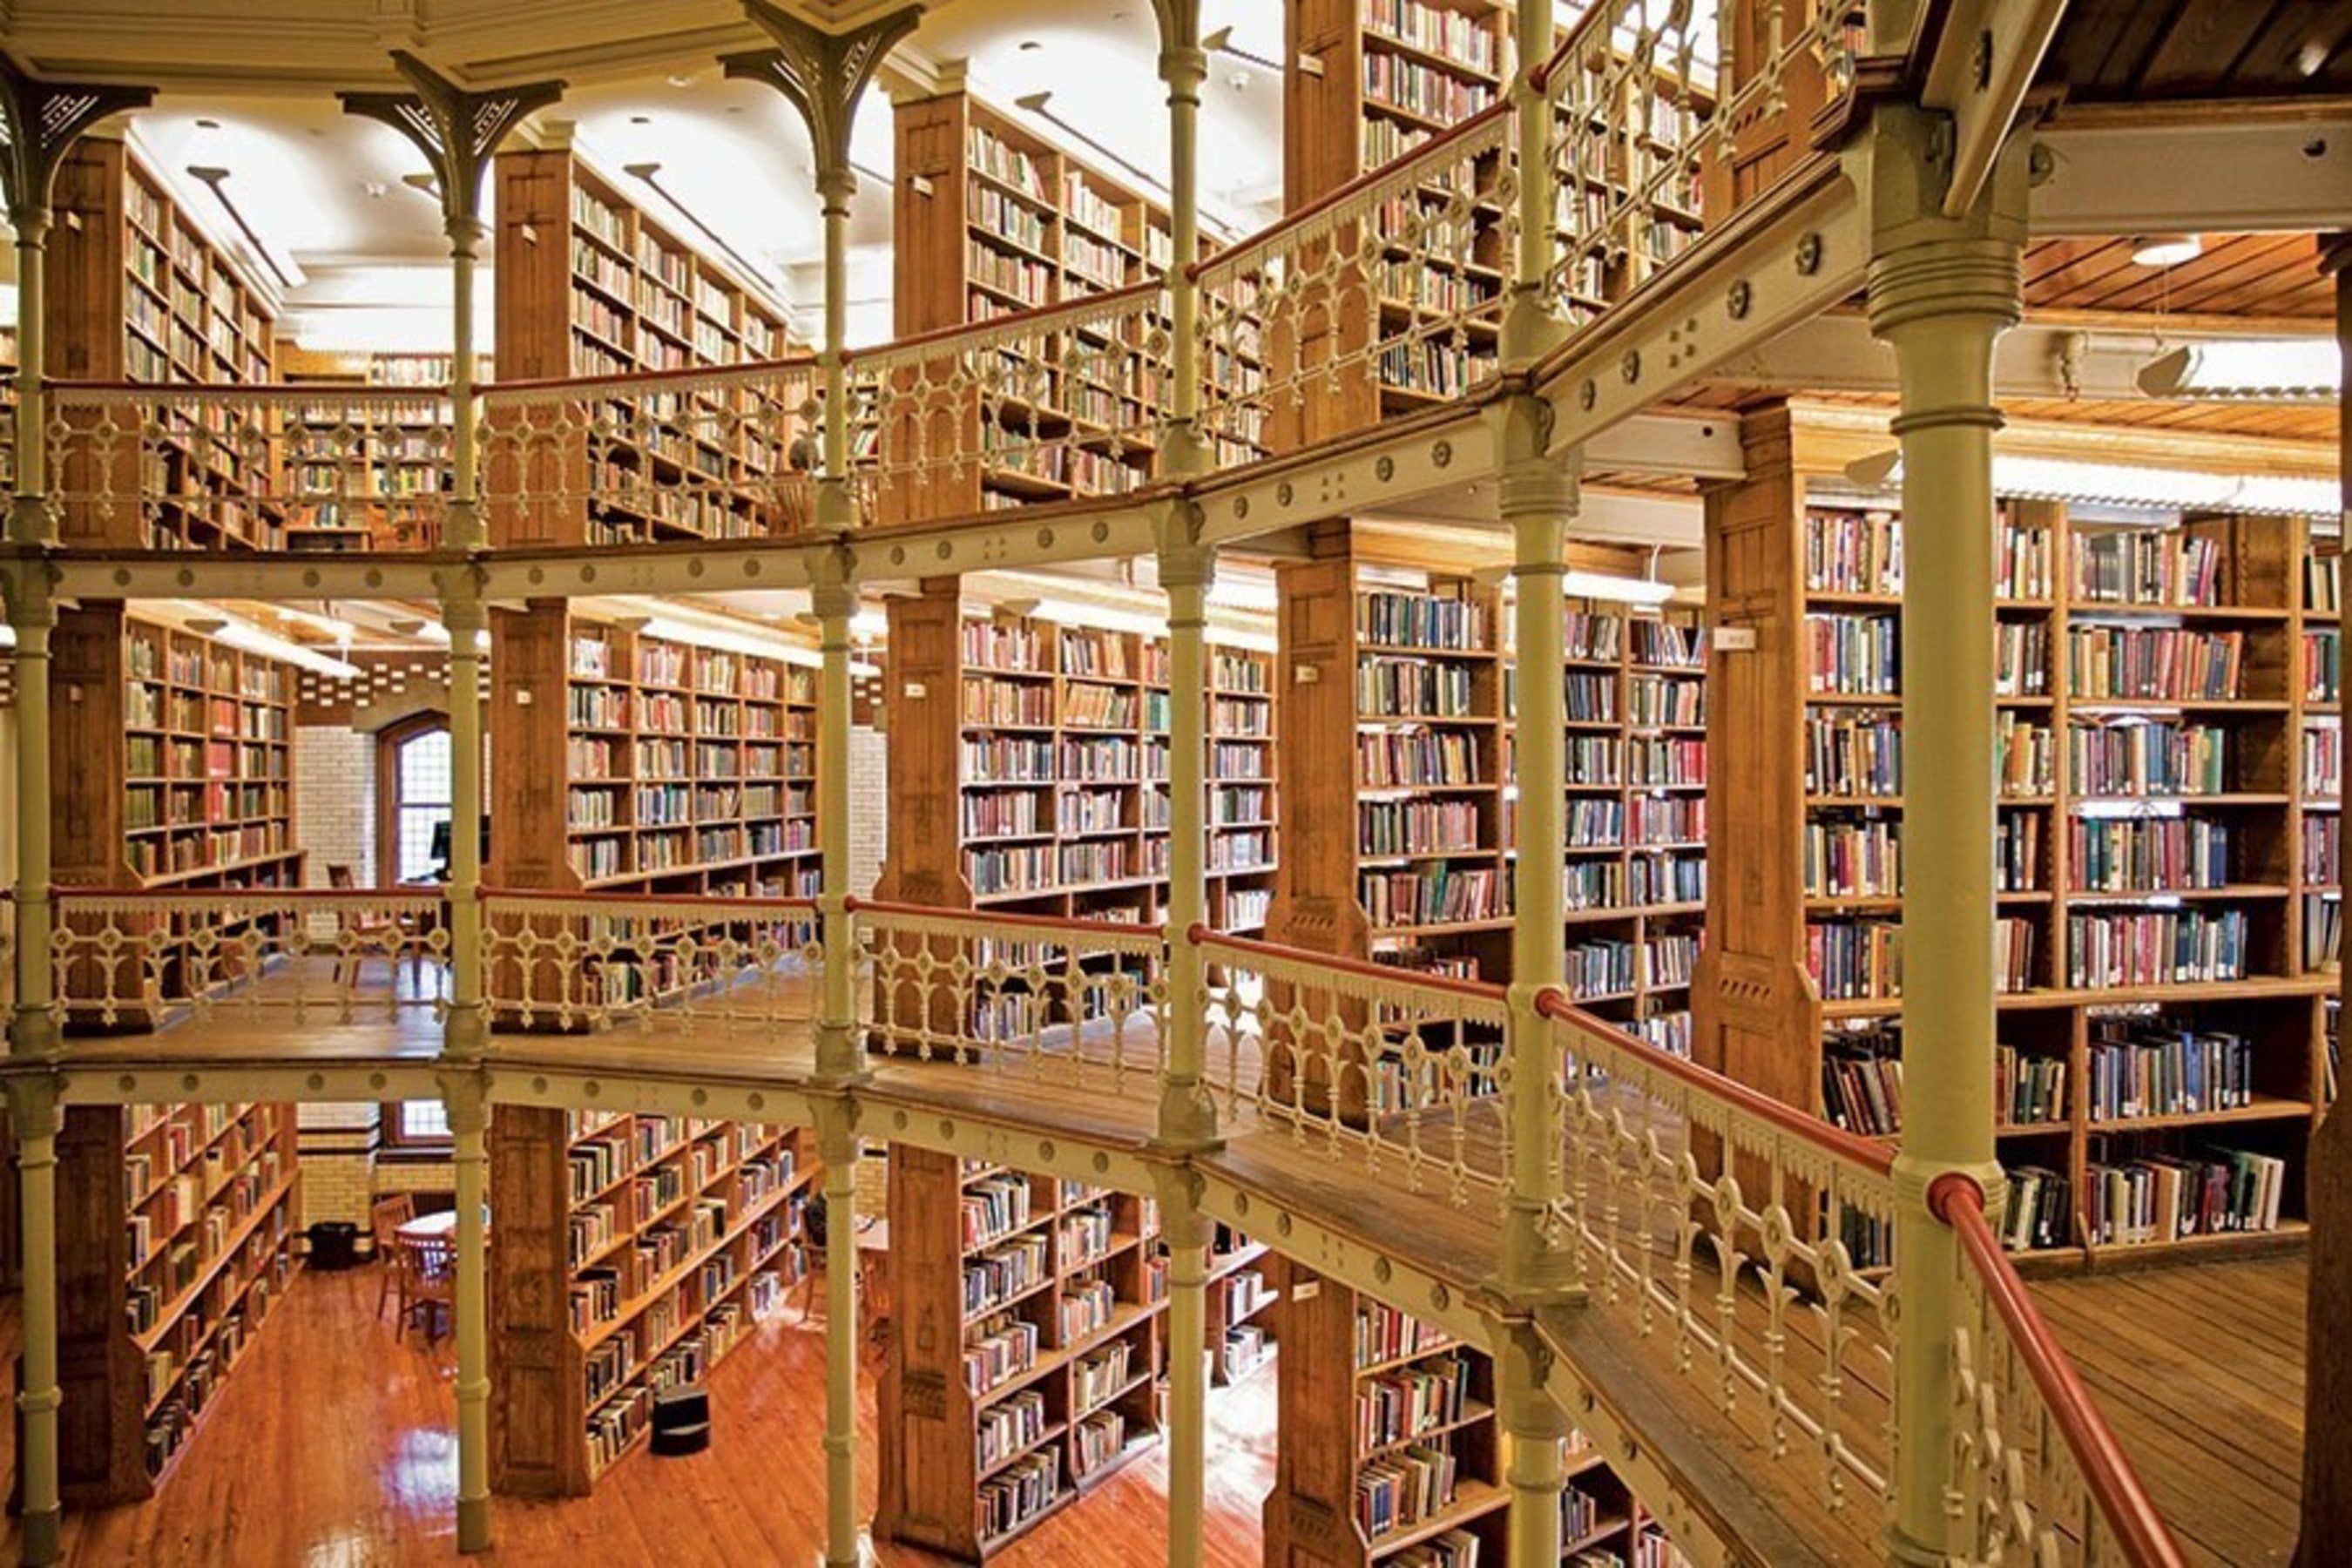 Library release. Библиотека Чикагского университета. Пенсильванский университет библиотека. Библиотека университета Чикаго. Библиотека «the Angel Library» в Киото.